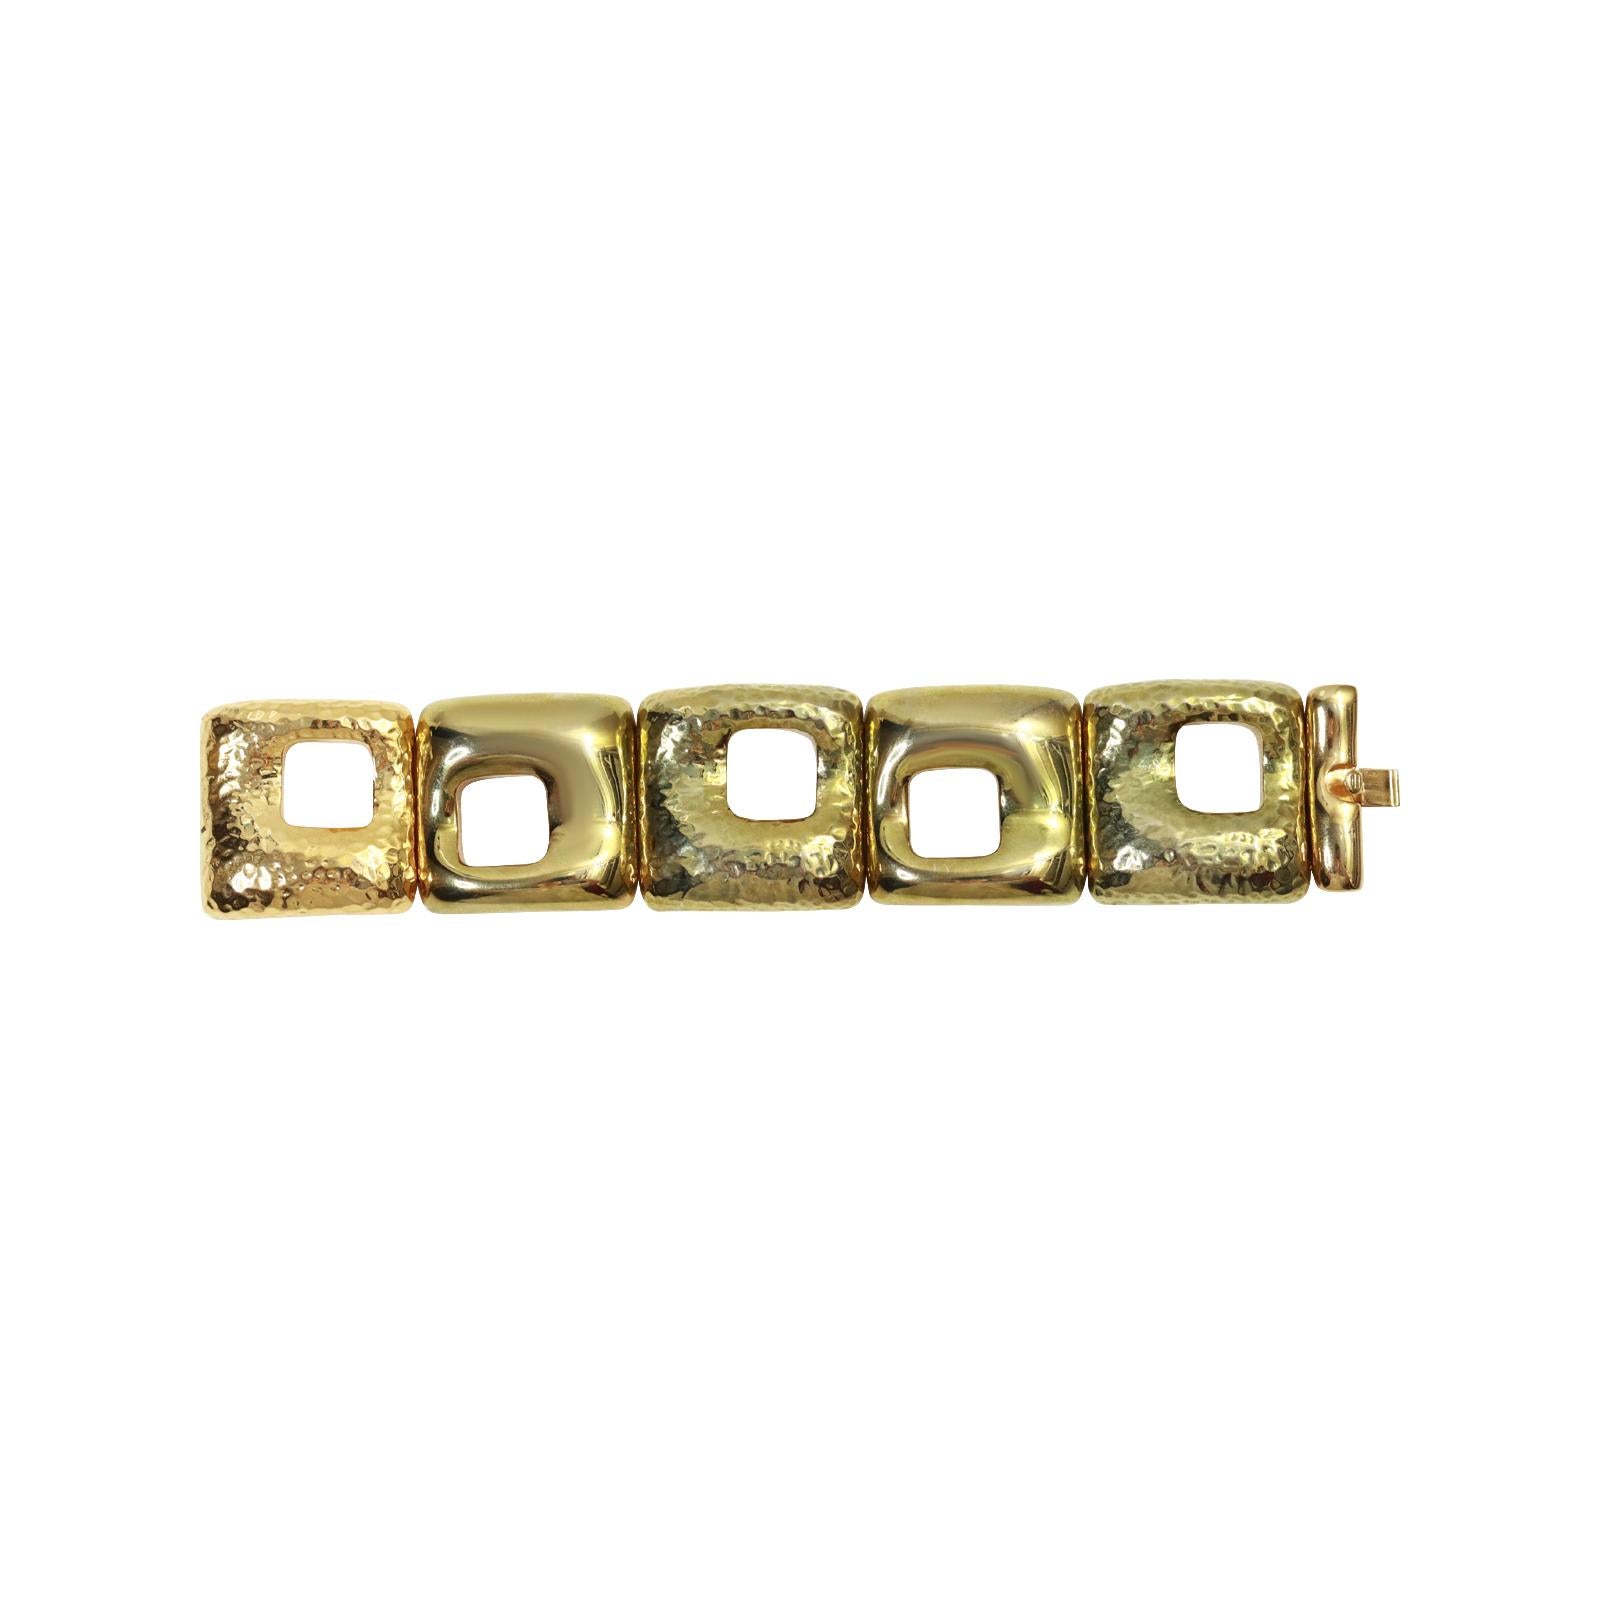 Vintage Gold Tone Heavy Link Bracelet Circa 1980s For Sale 1